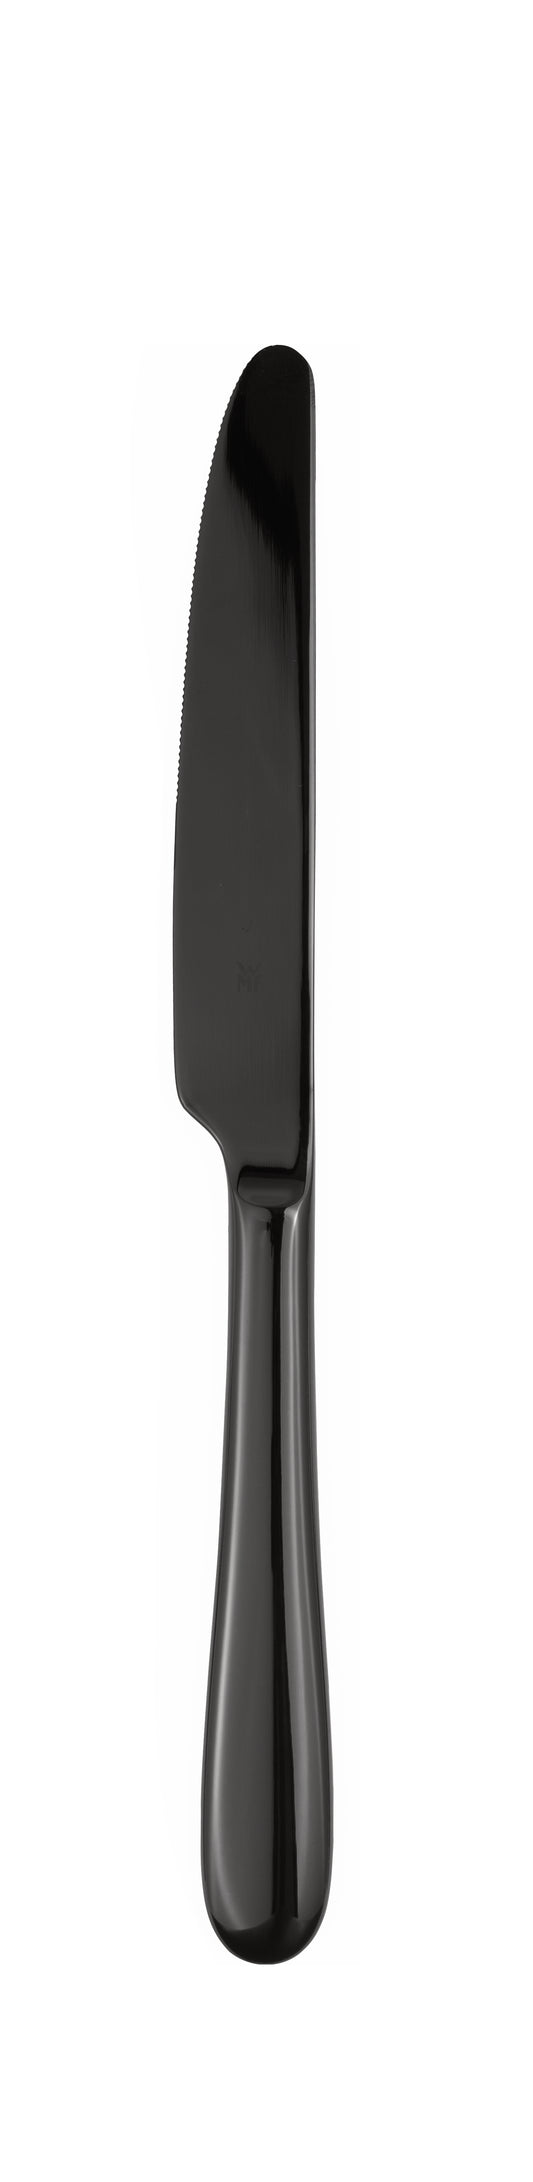 Table knife SARA PVD black 225mm